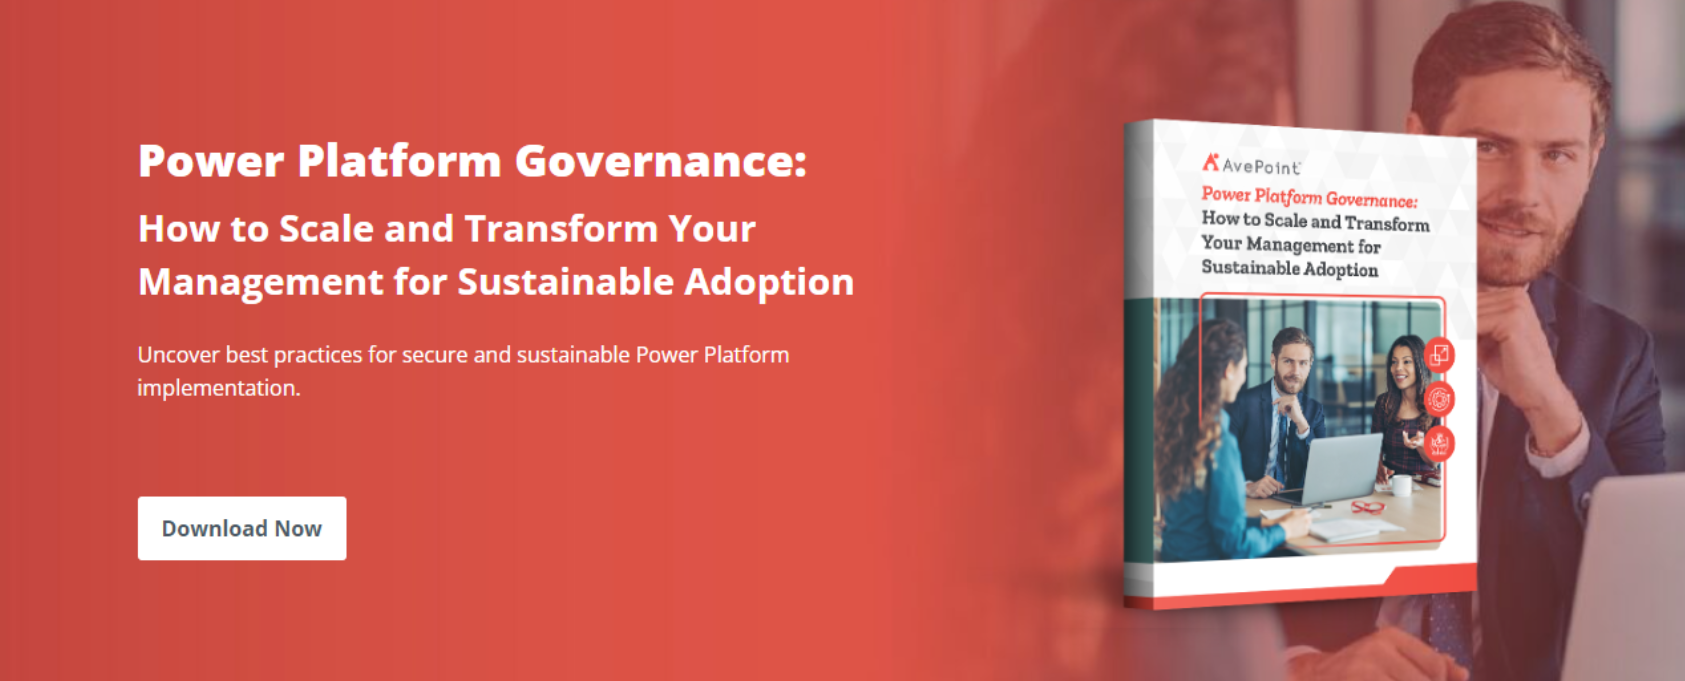 how-to-scale-power-platform-governance-ebook